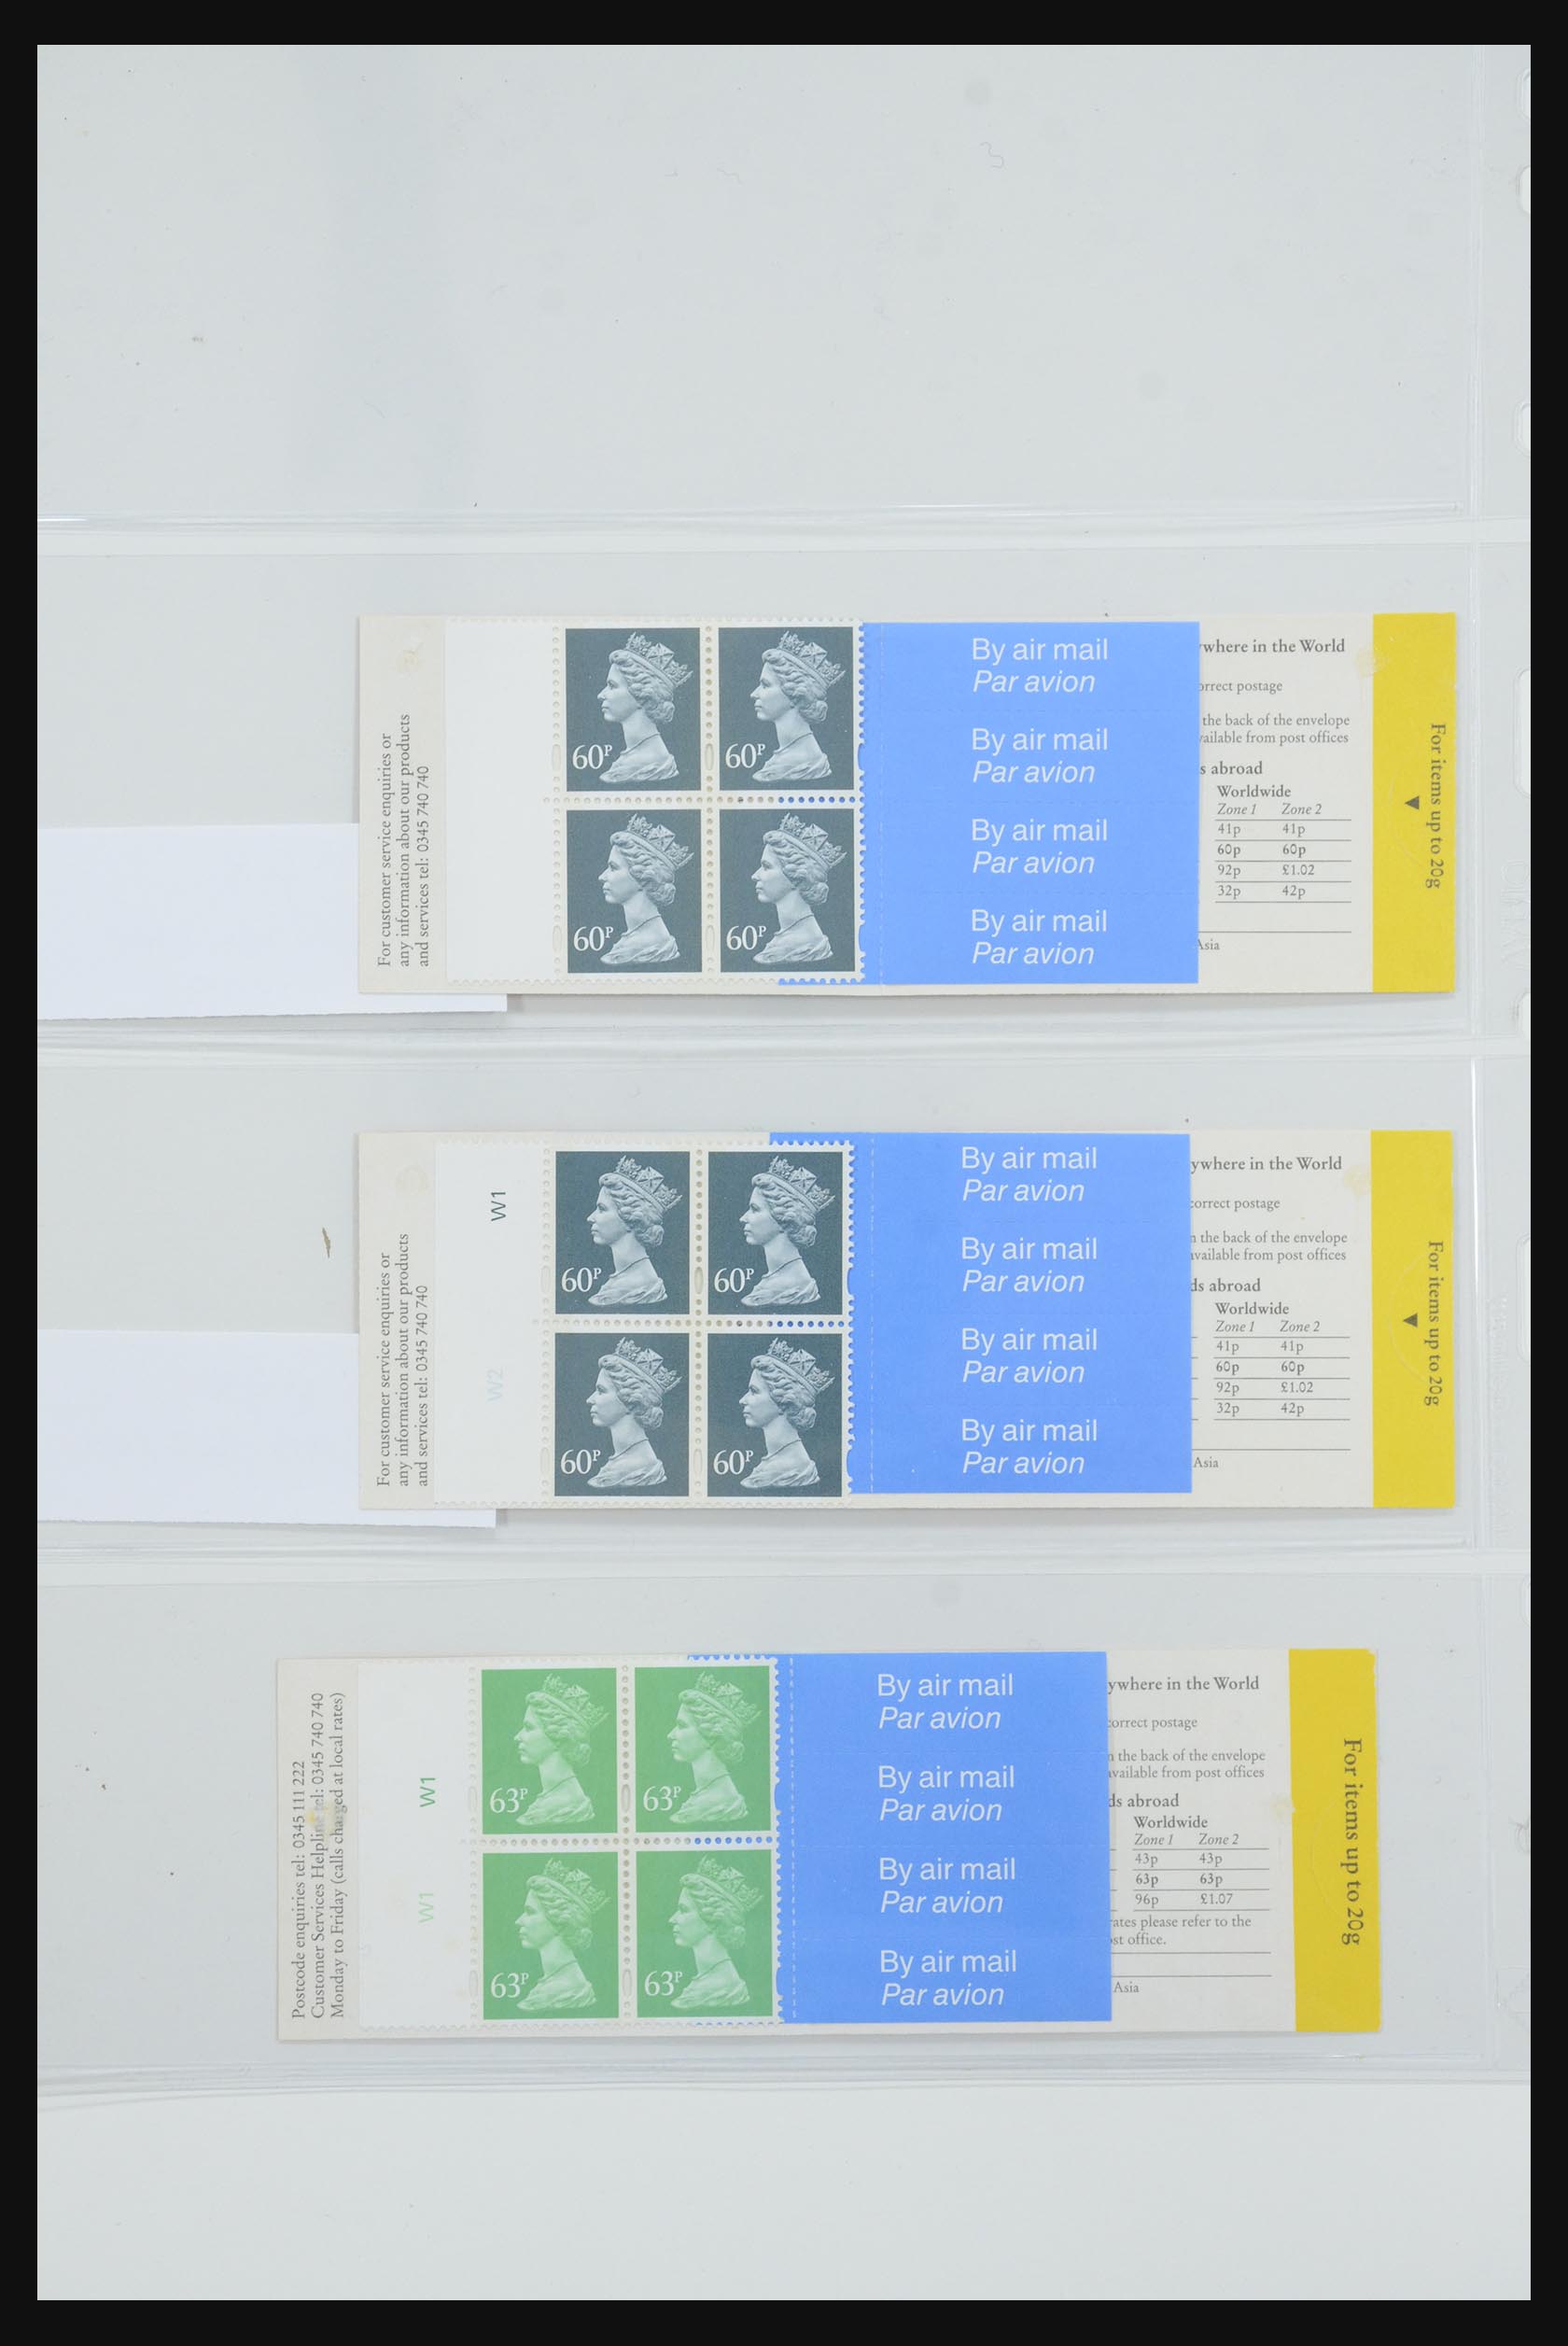 31959 080 - 31959 Great Britain stampbooklets 1987-2016!!